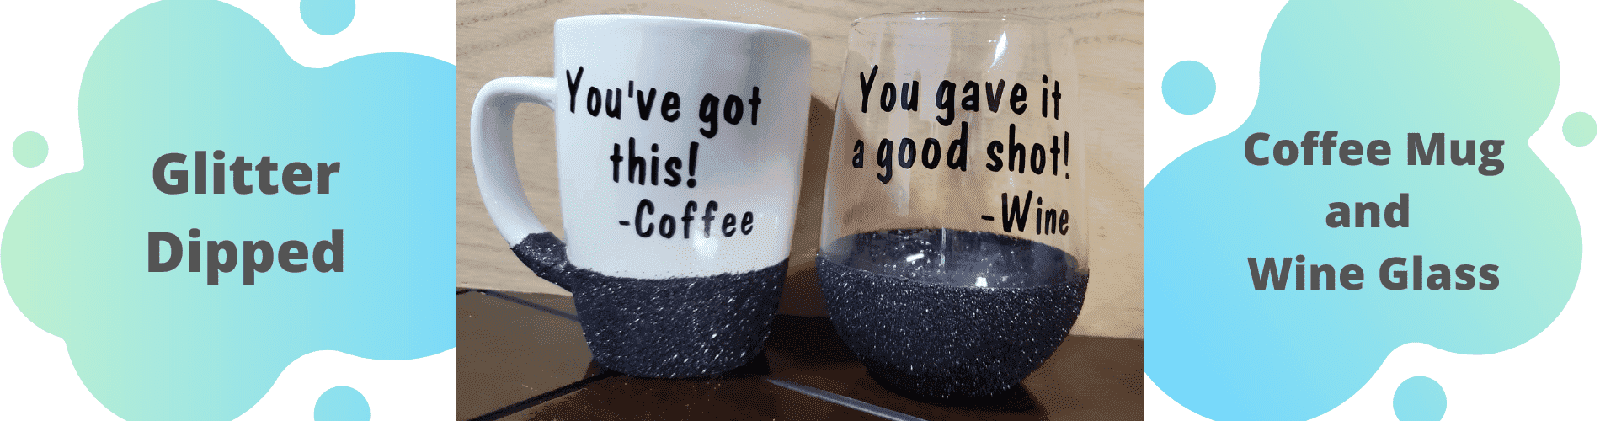 Glitter Dipped Coffee Mug and Wine Glass with Cricut Vinyl